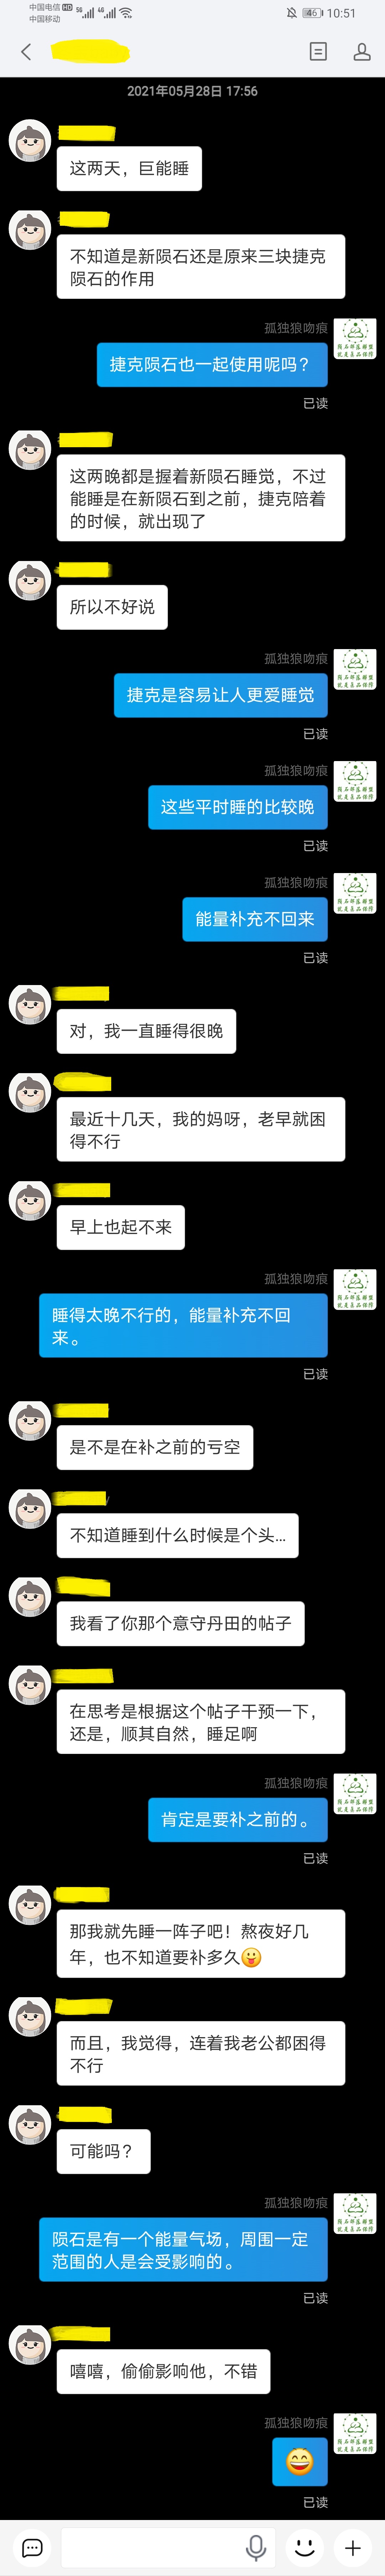 Screenshot_20210626_105144_com.taobao.qianniu - .jpg